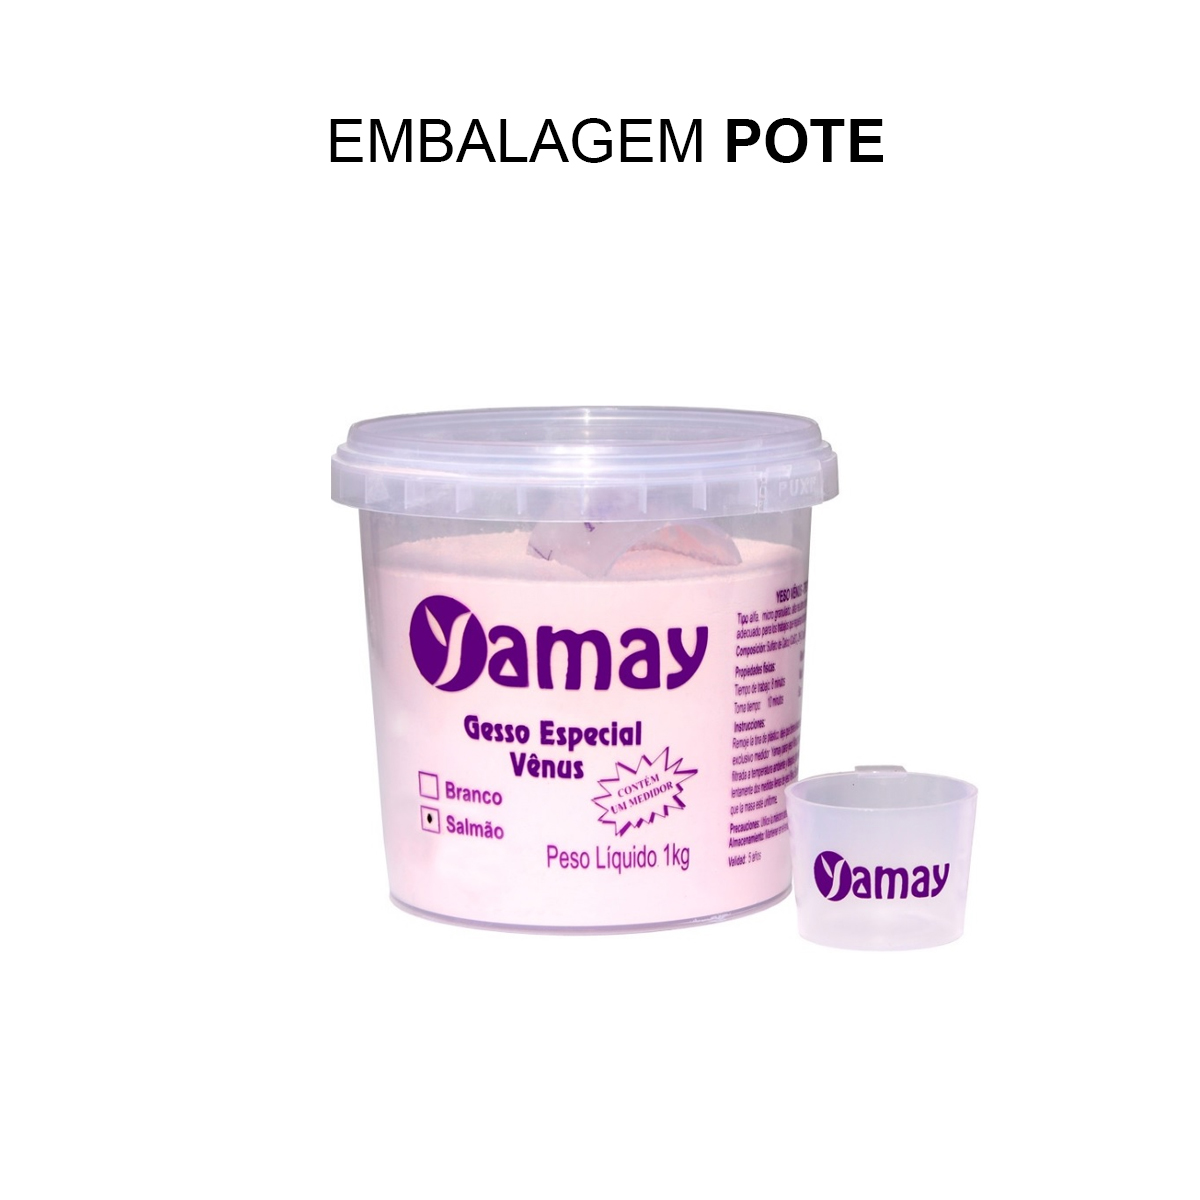 Gesso Especial Venus Yamay 1kg - Pote/Refil